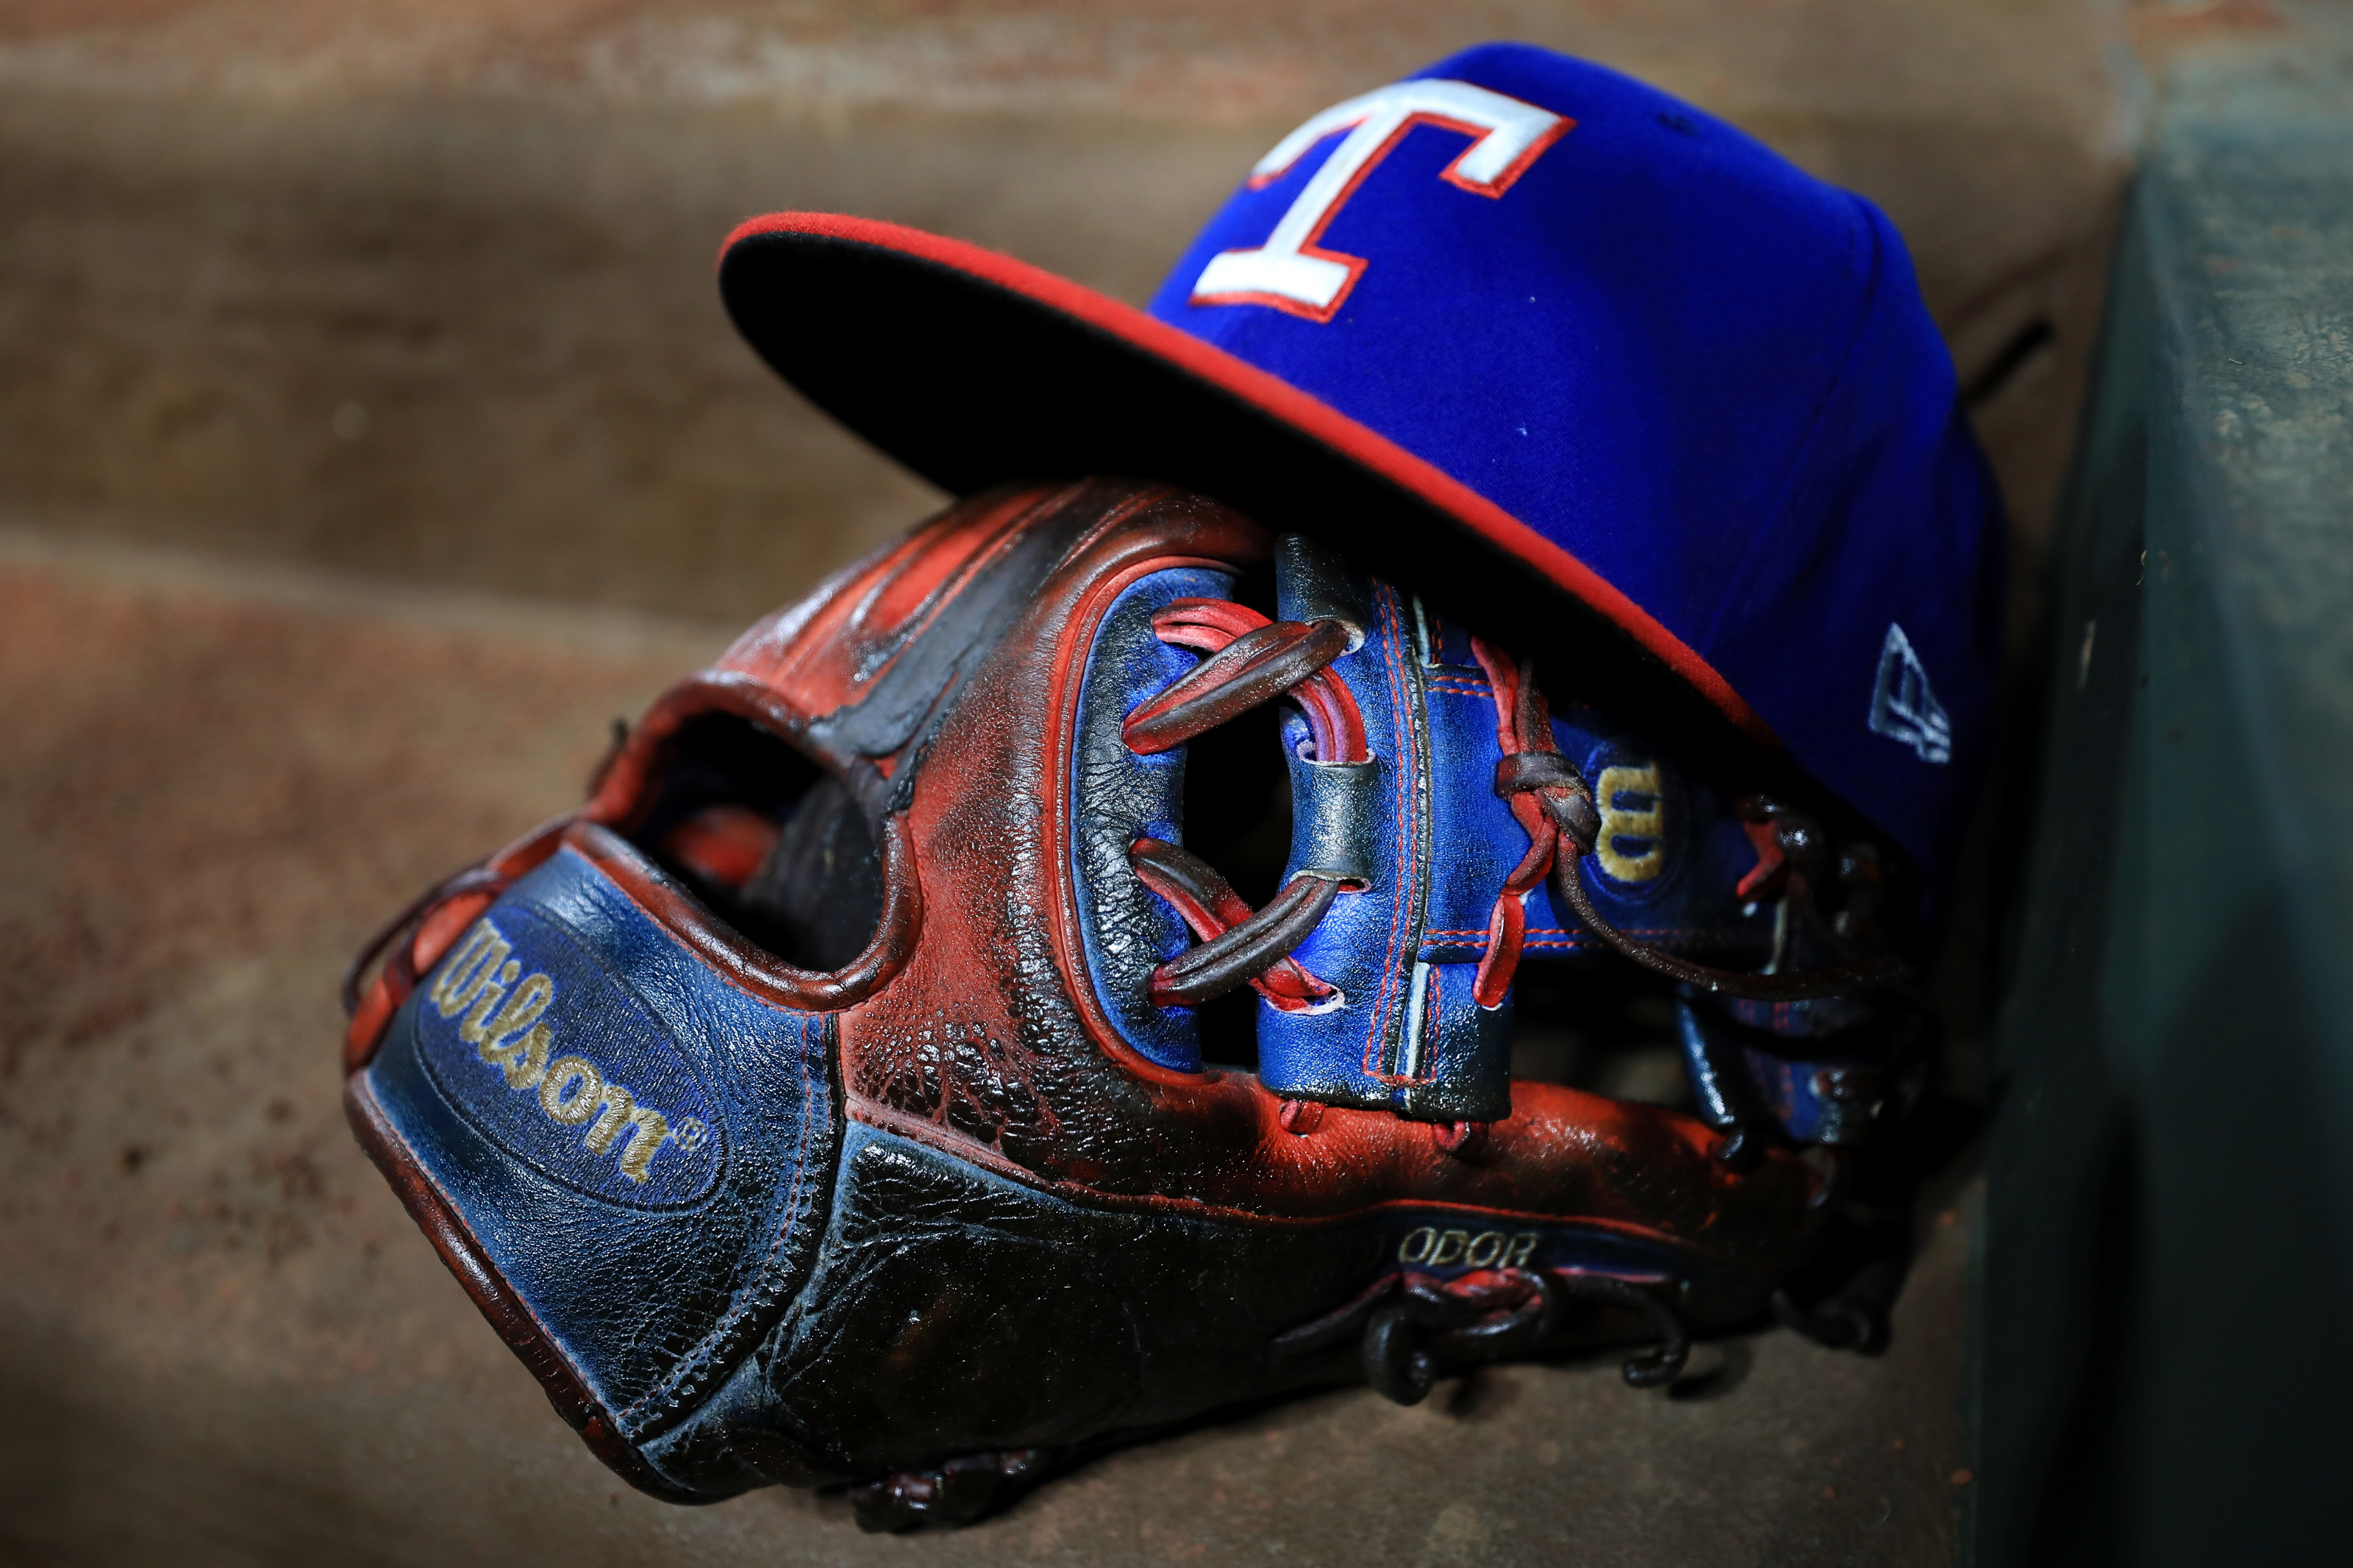 Texas Tech baseball alums: Josh Jung's big series helps Texas